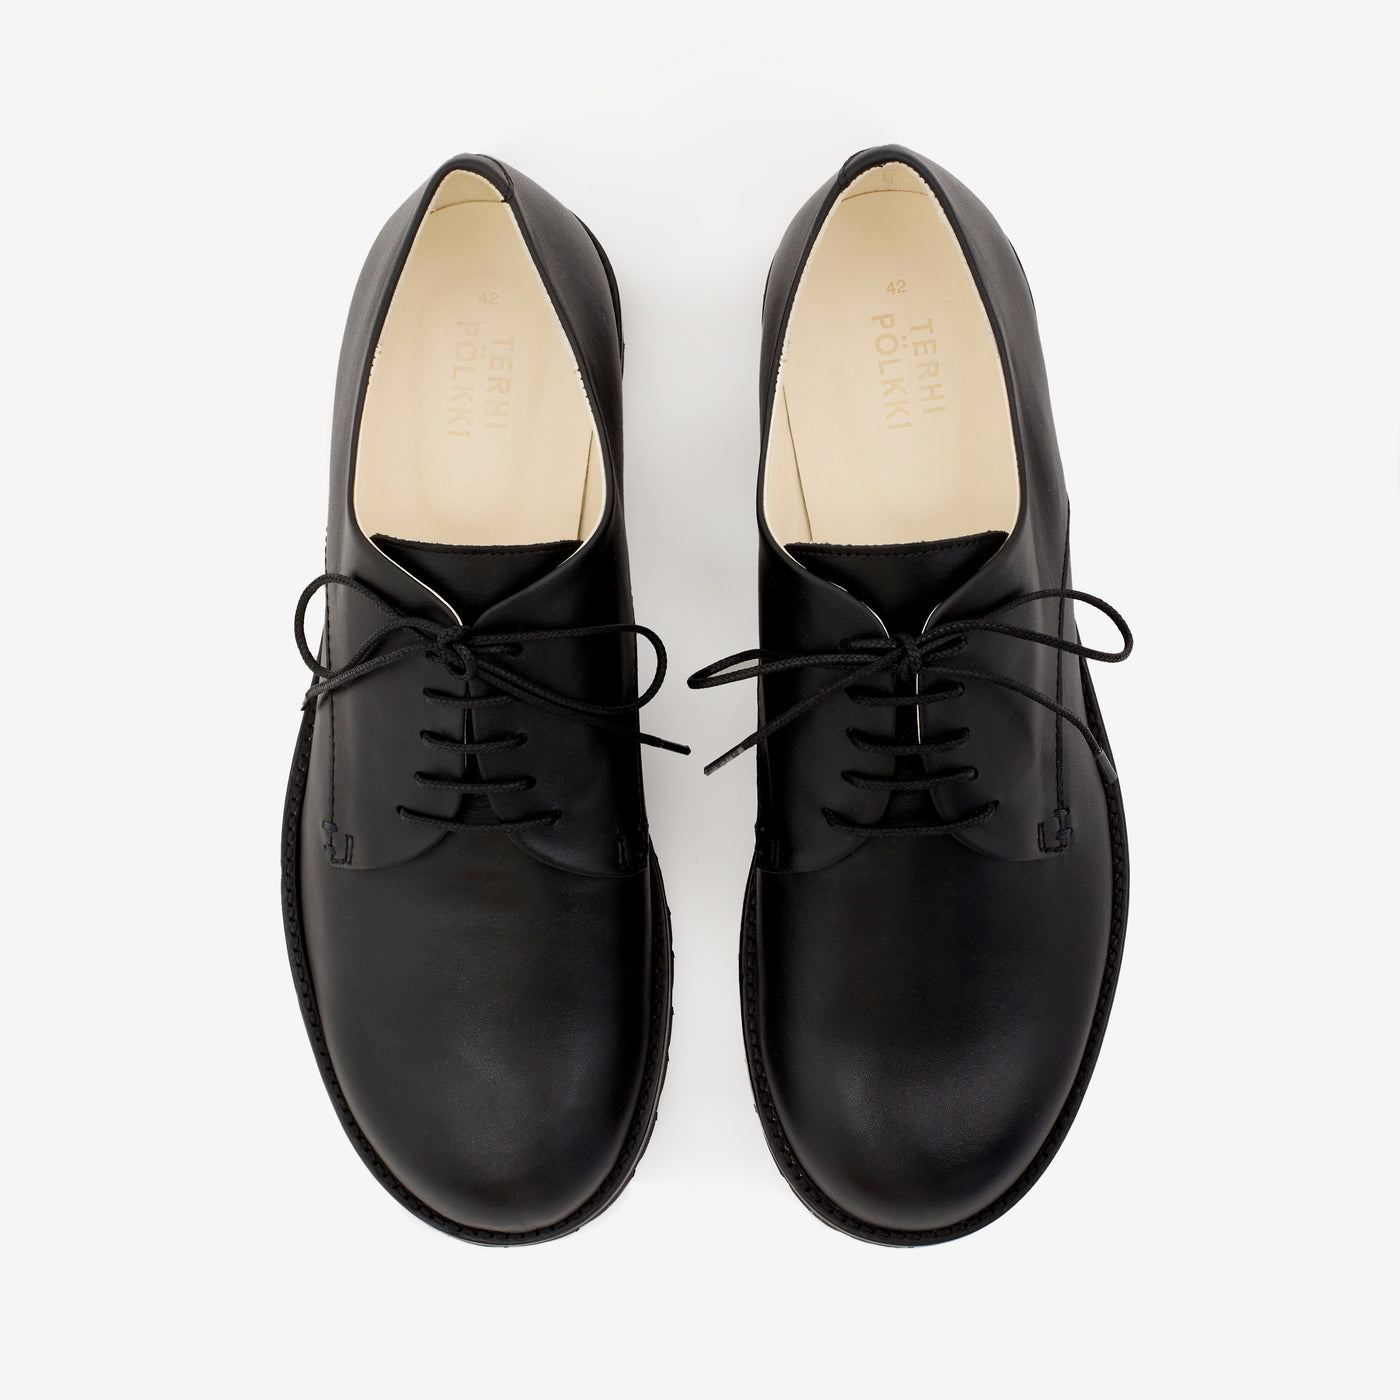 Mr. Derby shoe black